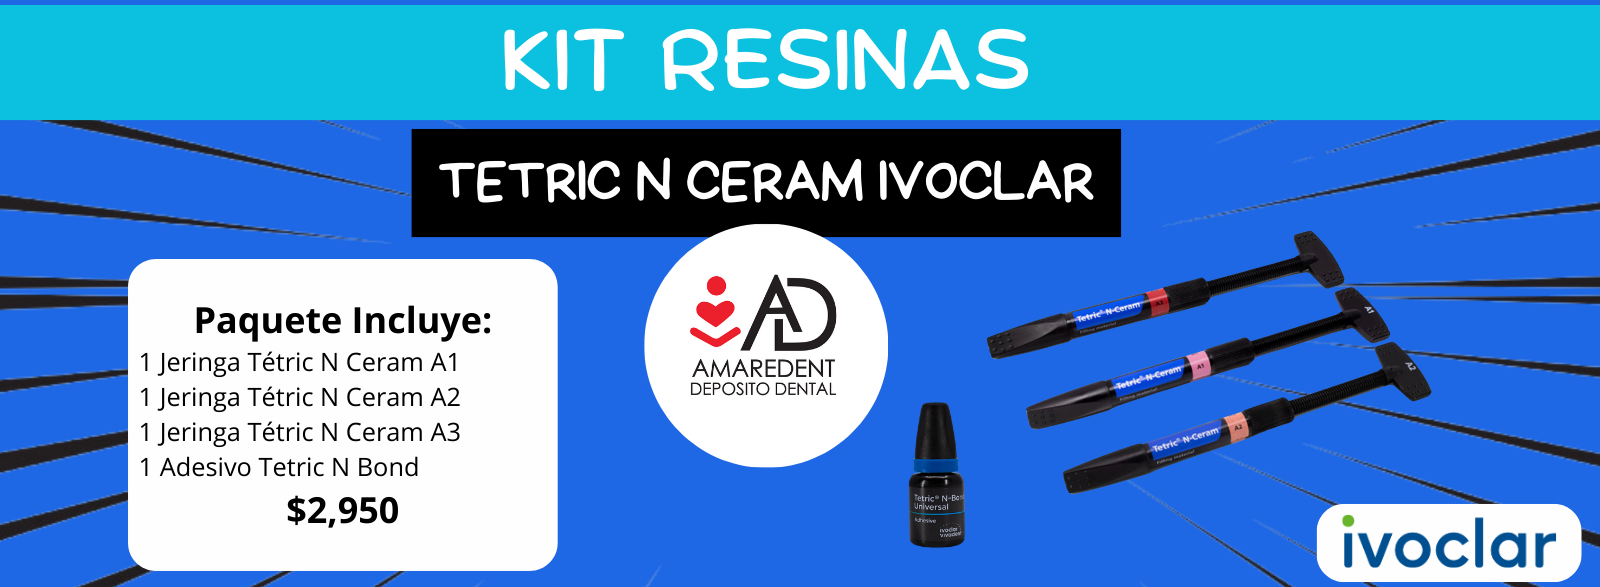 Kit de Resinas Ivoclar Tetric N Ceram